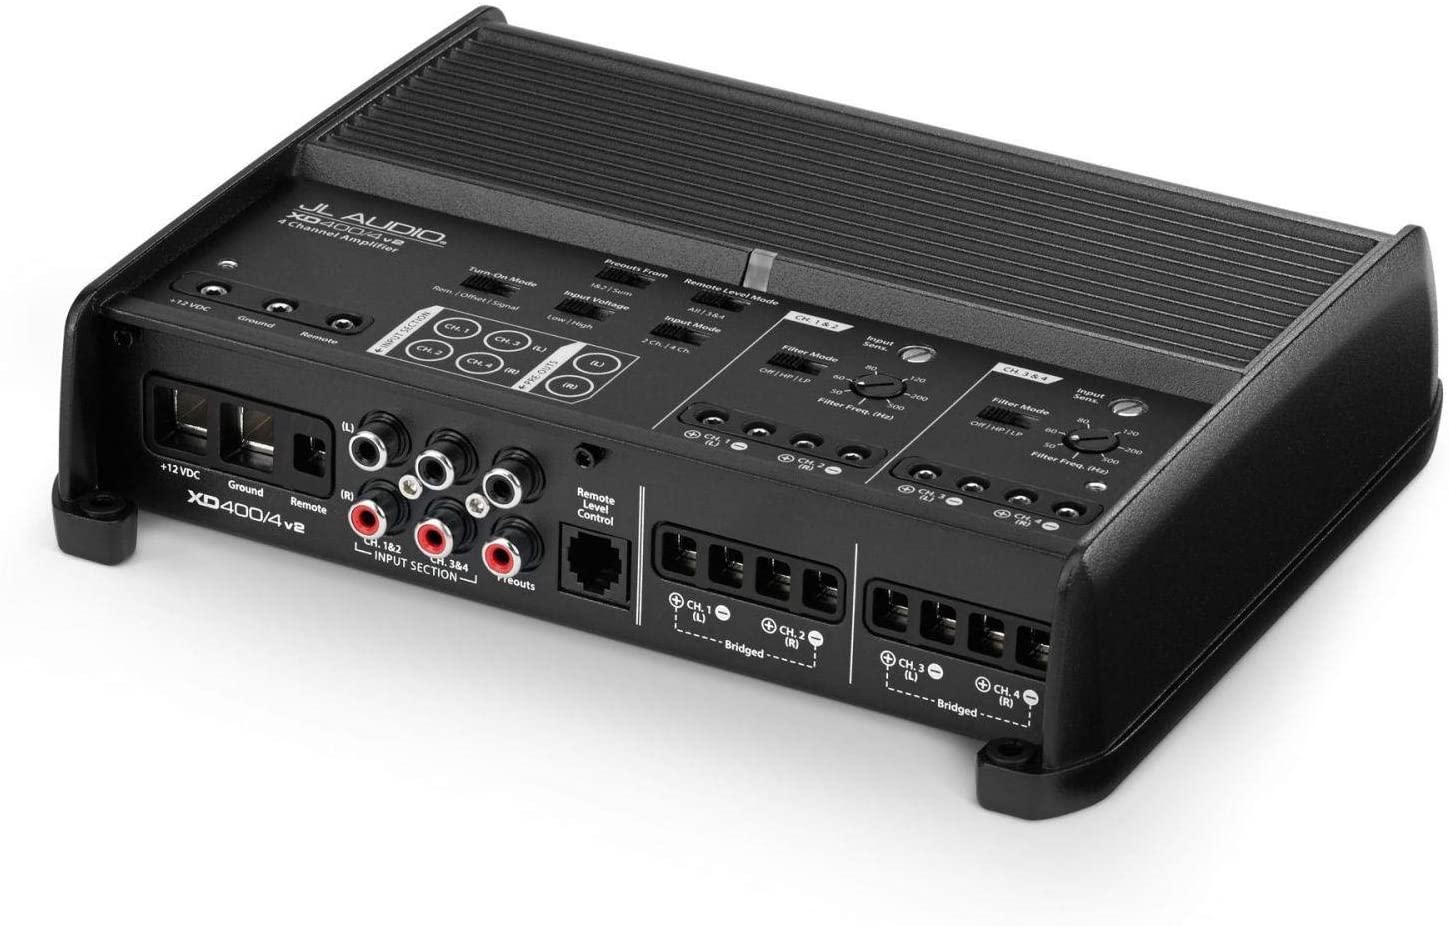 Best 4 Channel Car Amp for Sound Quality JL Audio XD4004v2 4 channel car amplifier